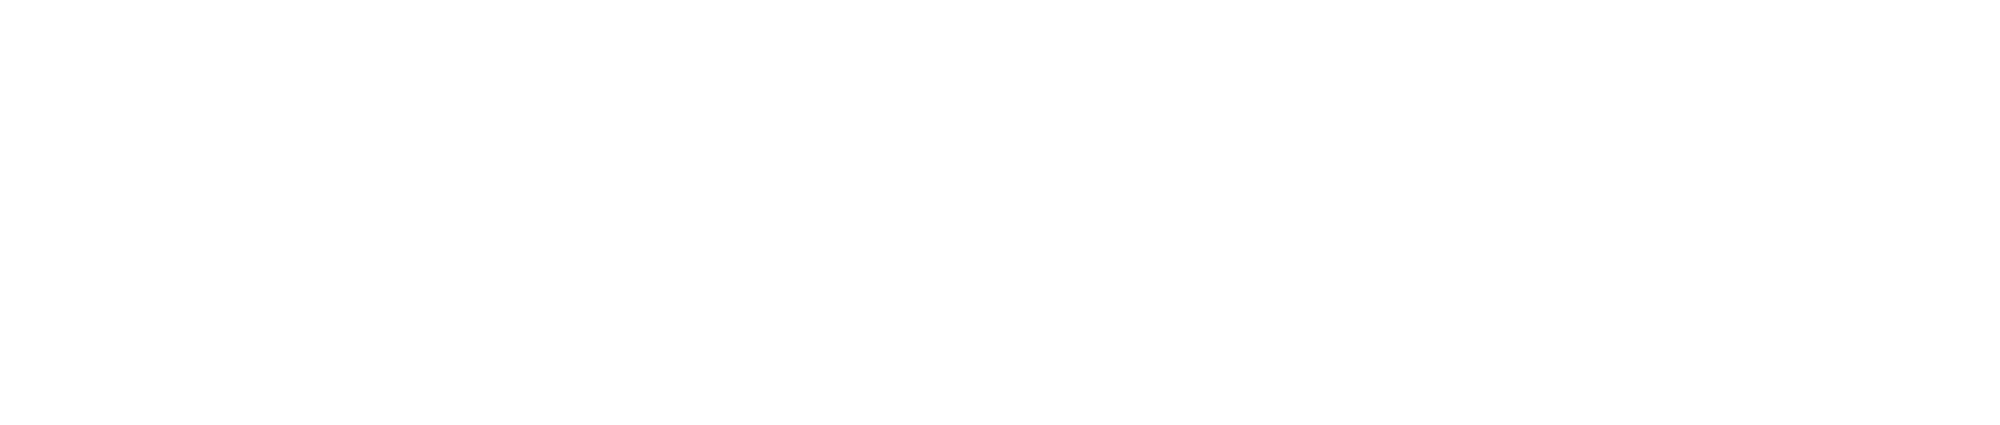 LOGO TRACTOPARTS BLANCO